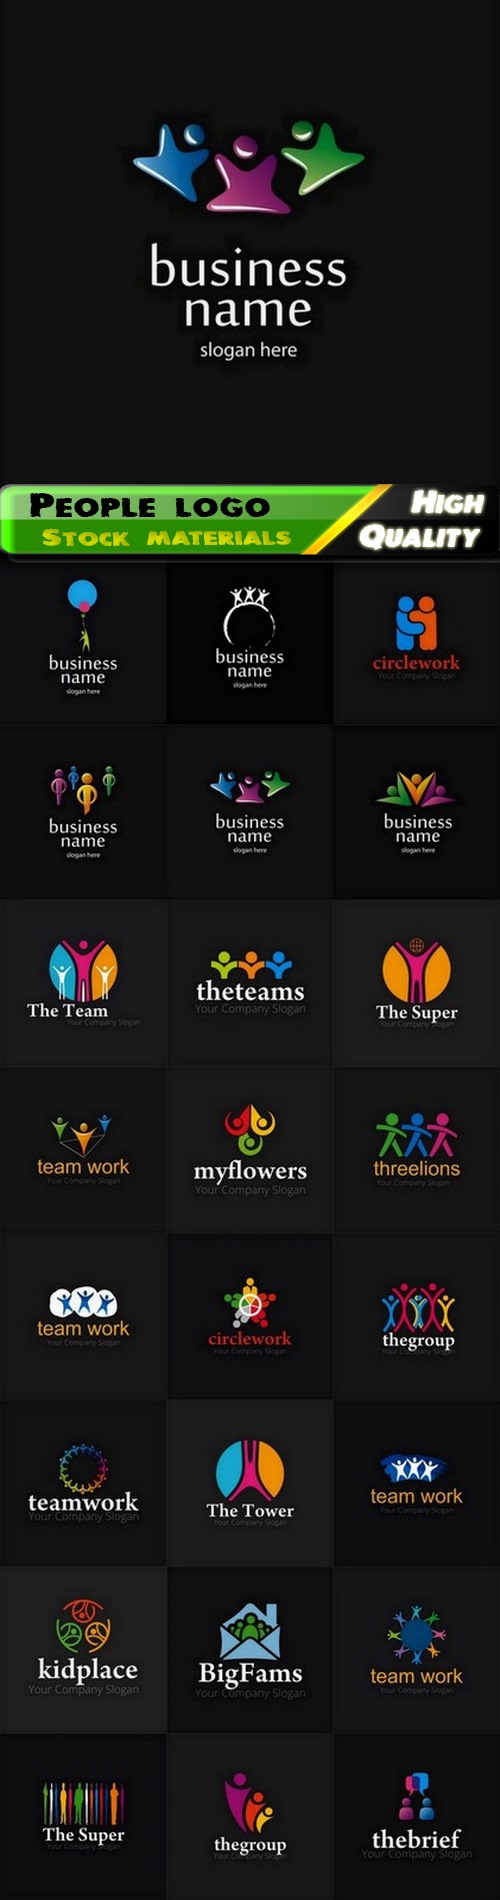 People group friendship teamwork leadership logo and emblem 25 Eps